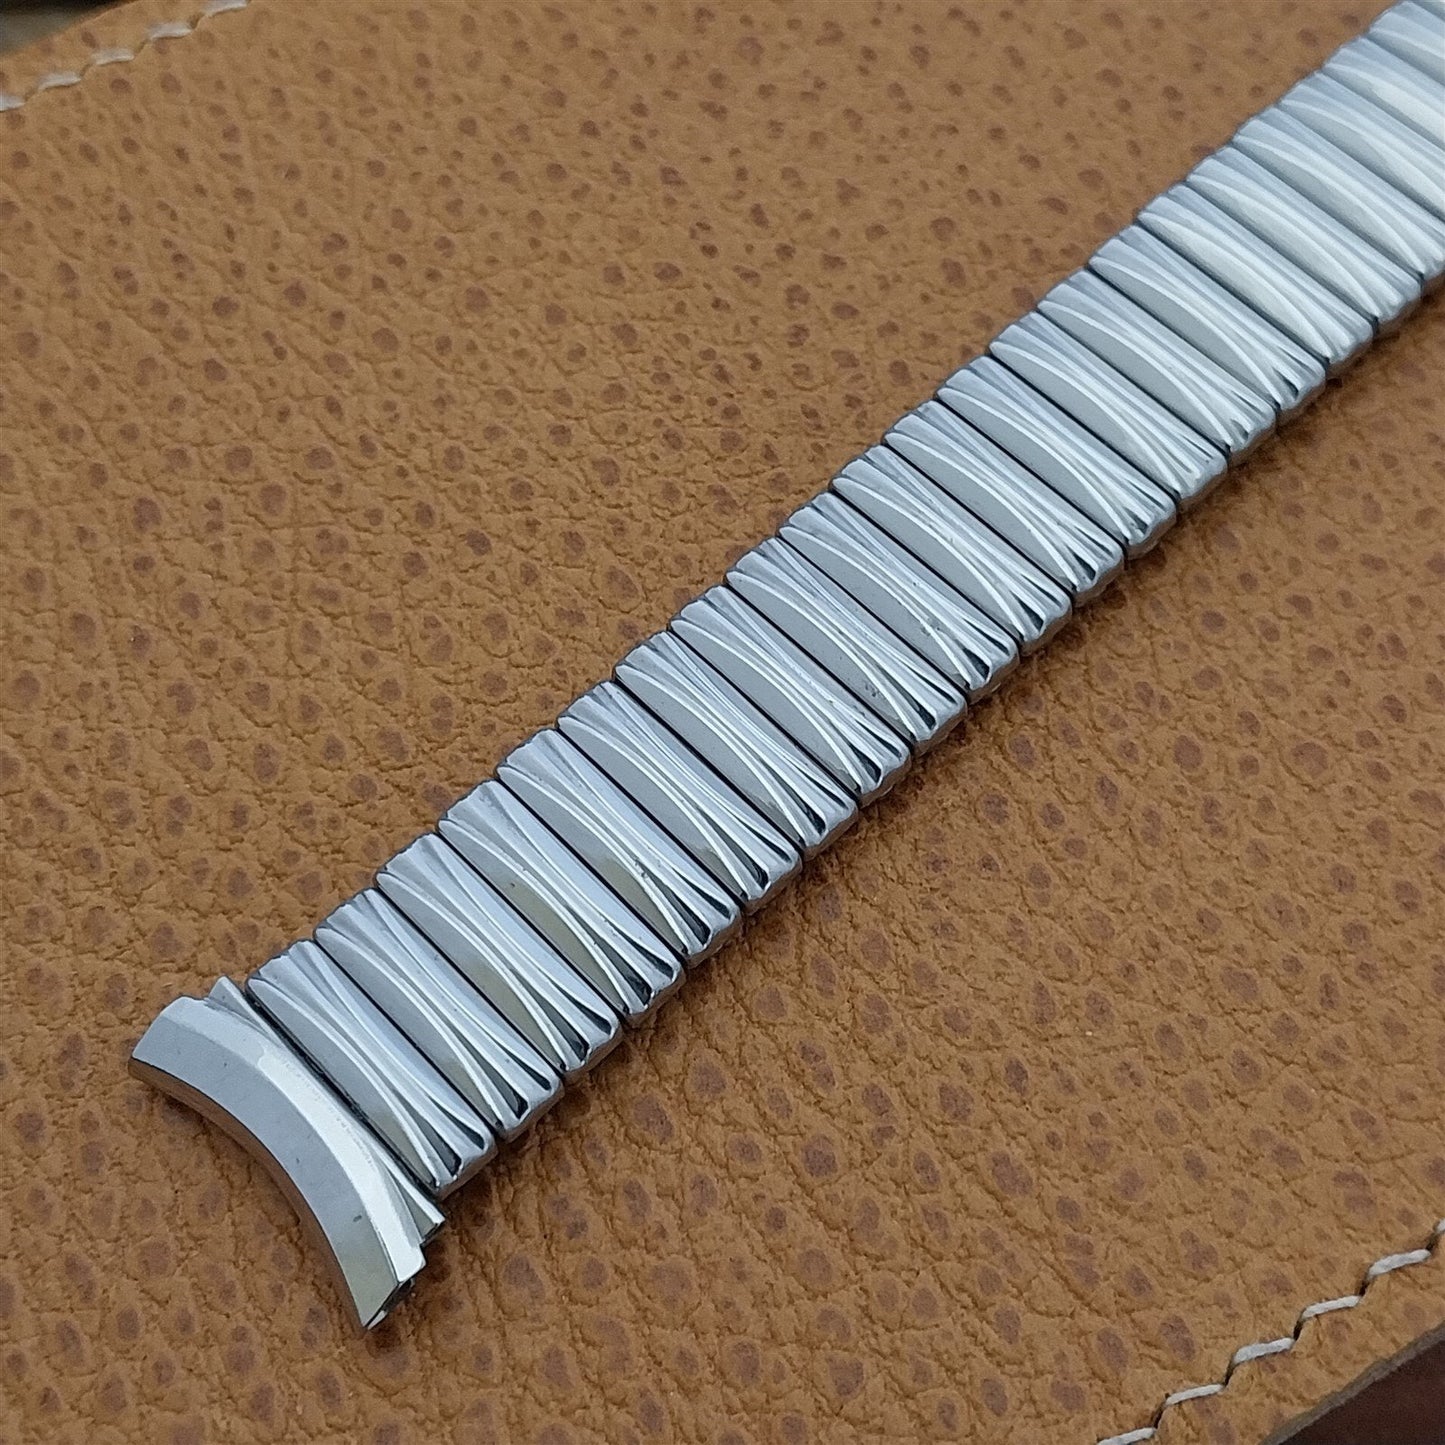 19mm 18mm Kreisler Short Stainless Steel Expansion nos 1960s Vintage Watch Band